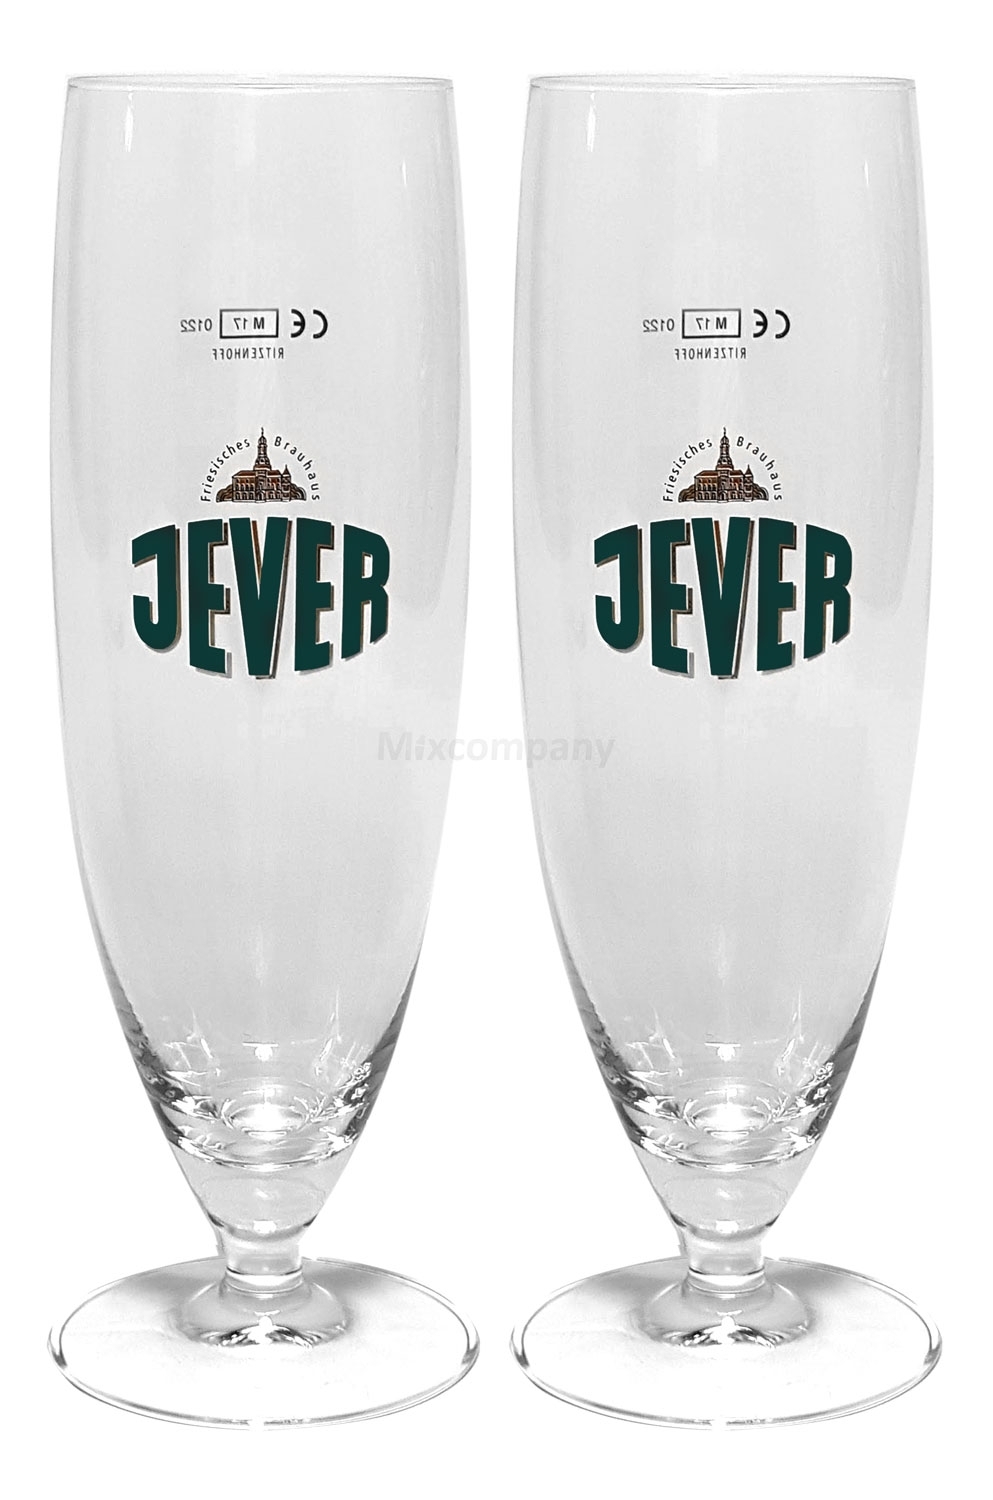 Jever Bier Glas Bierglas Tulpenglas Gläser Set - 2x Pilstulpen 300ml